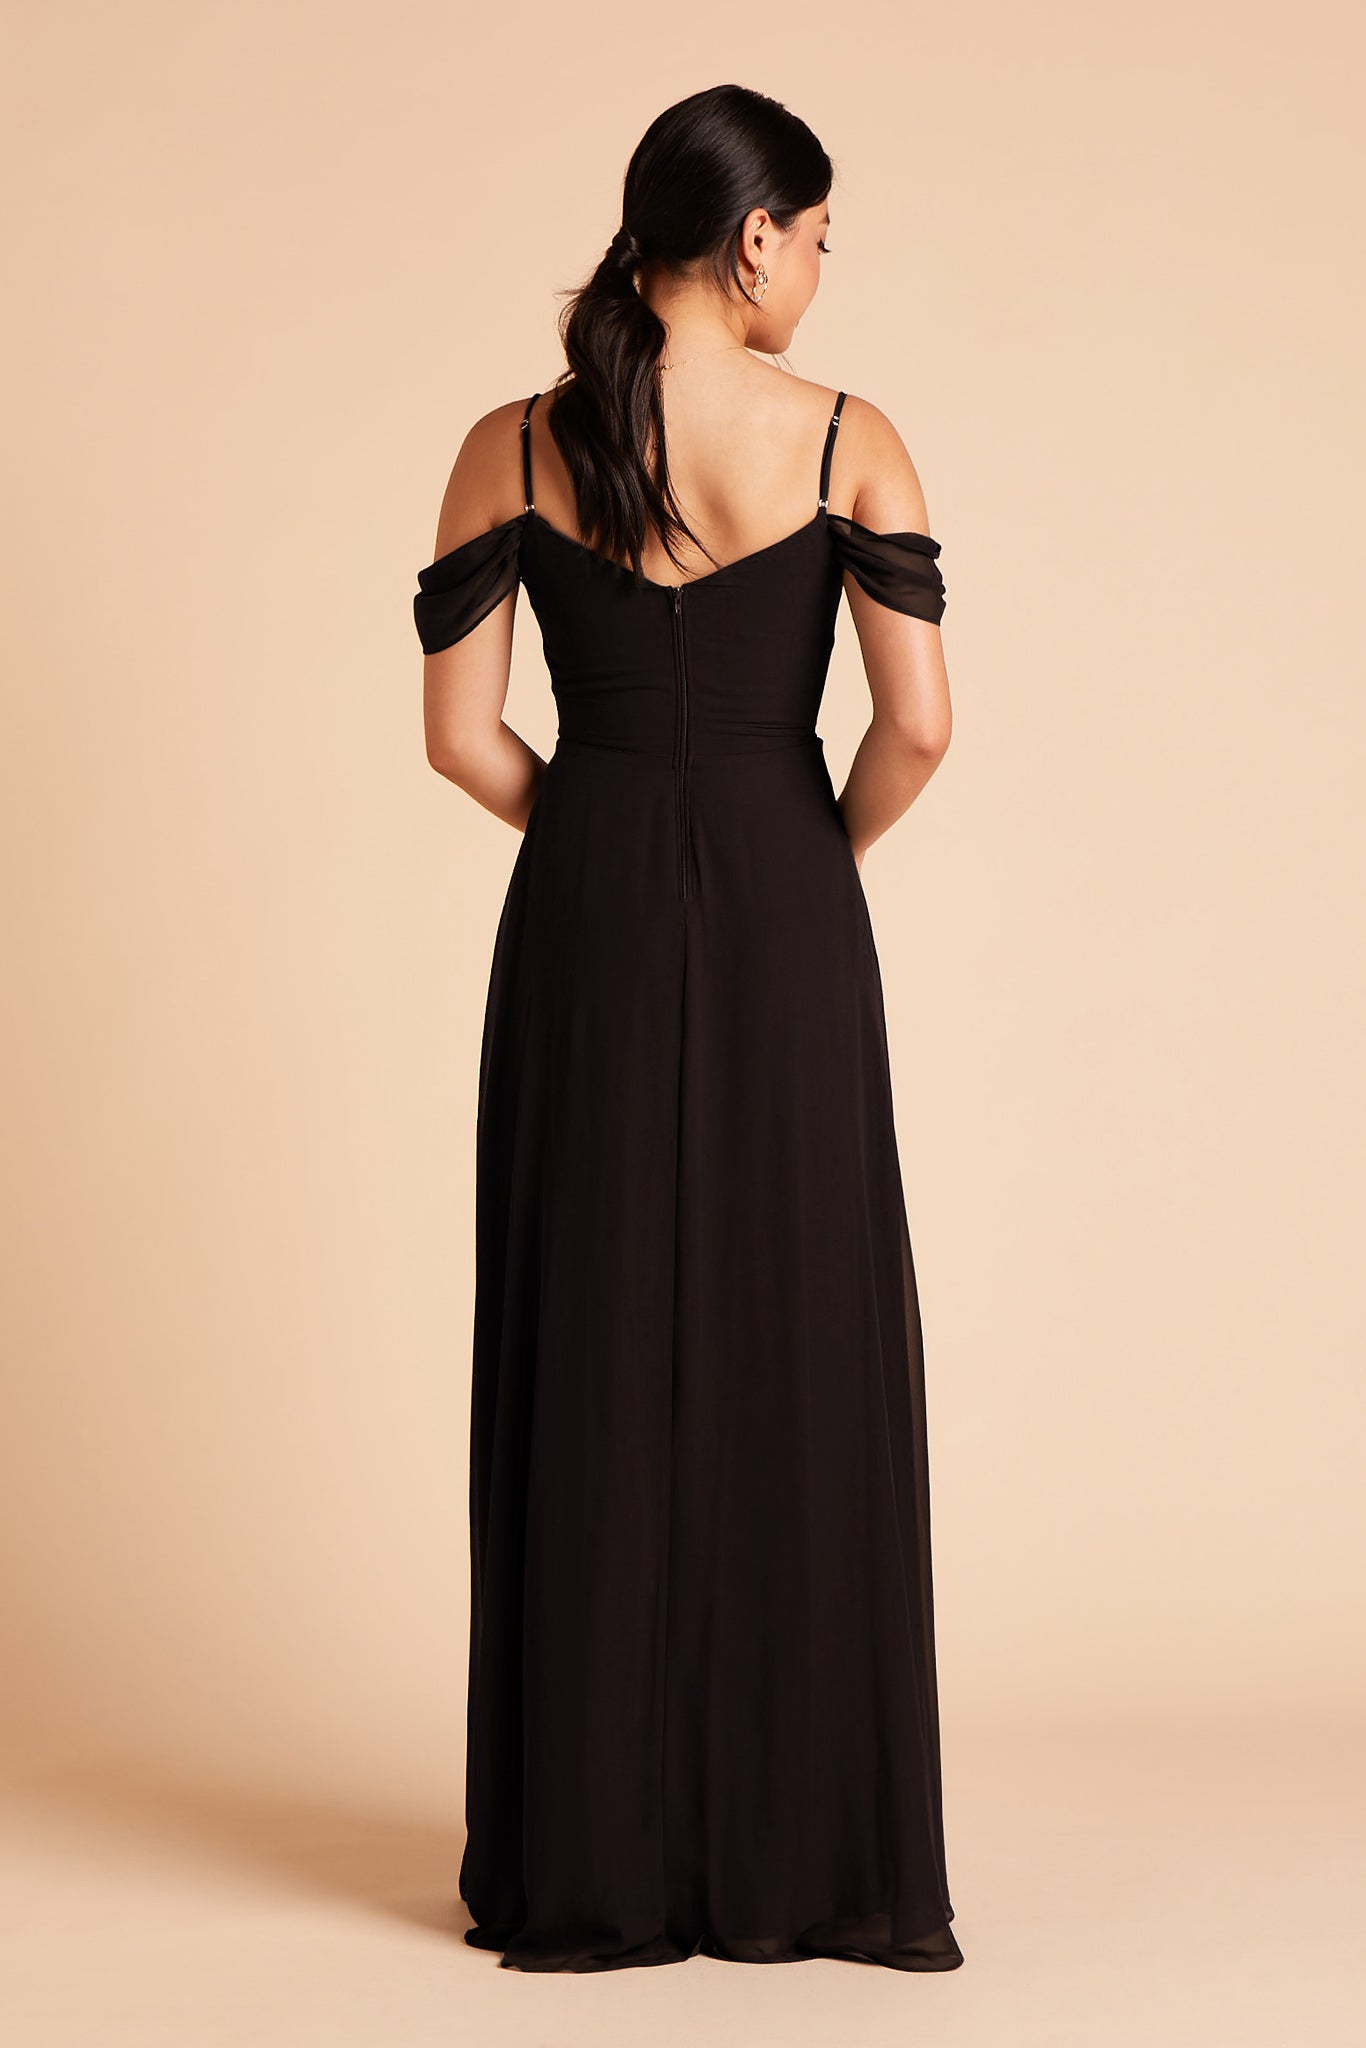 Long floor-sweeping black chiffon bridesmaid dress with sleeves